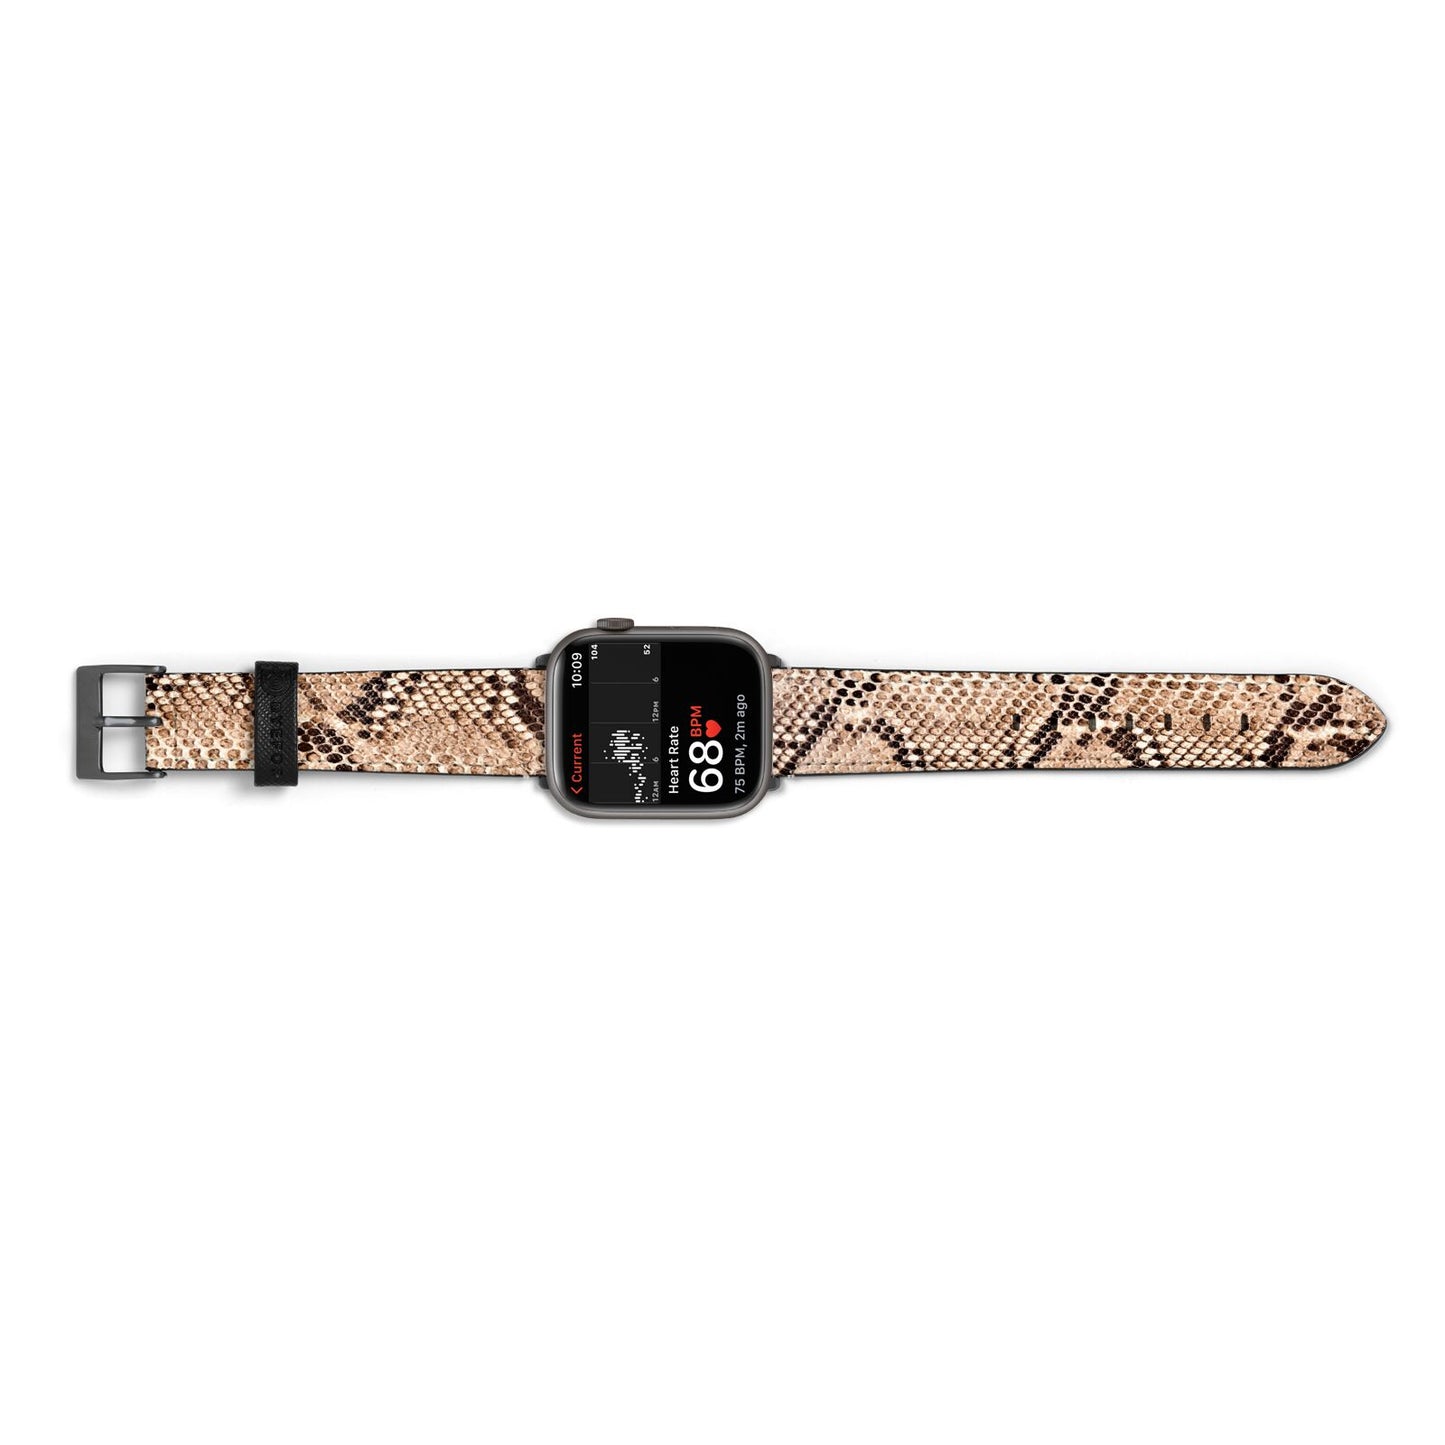 Snakeskin Apple Watch Strap Size 38mm Landscape Image Space Grey Hardware